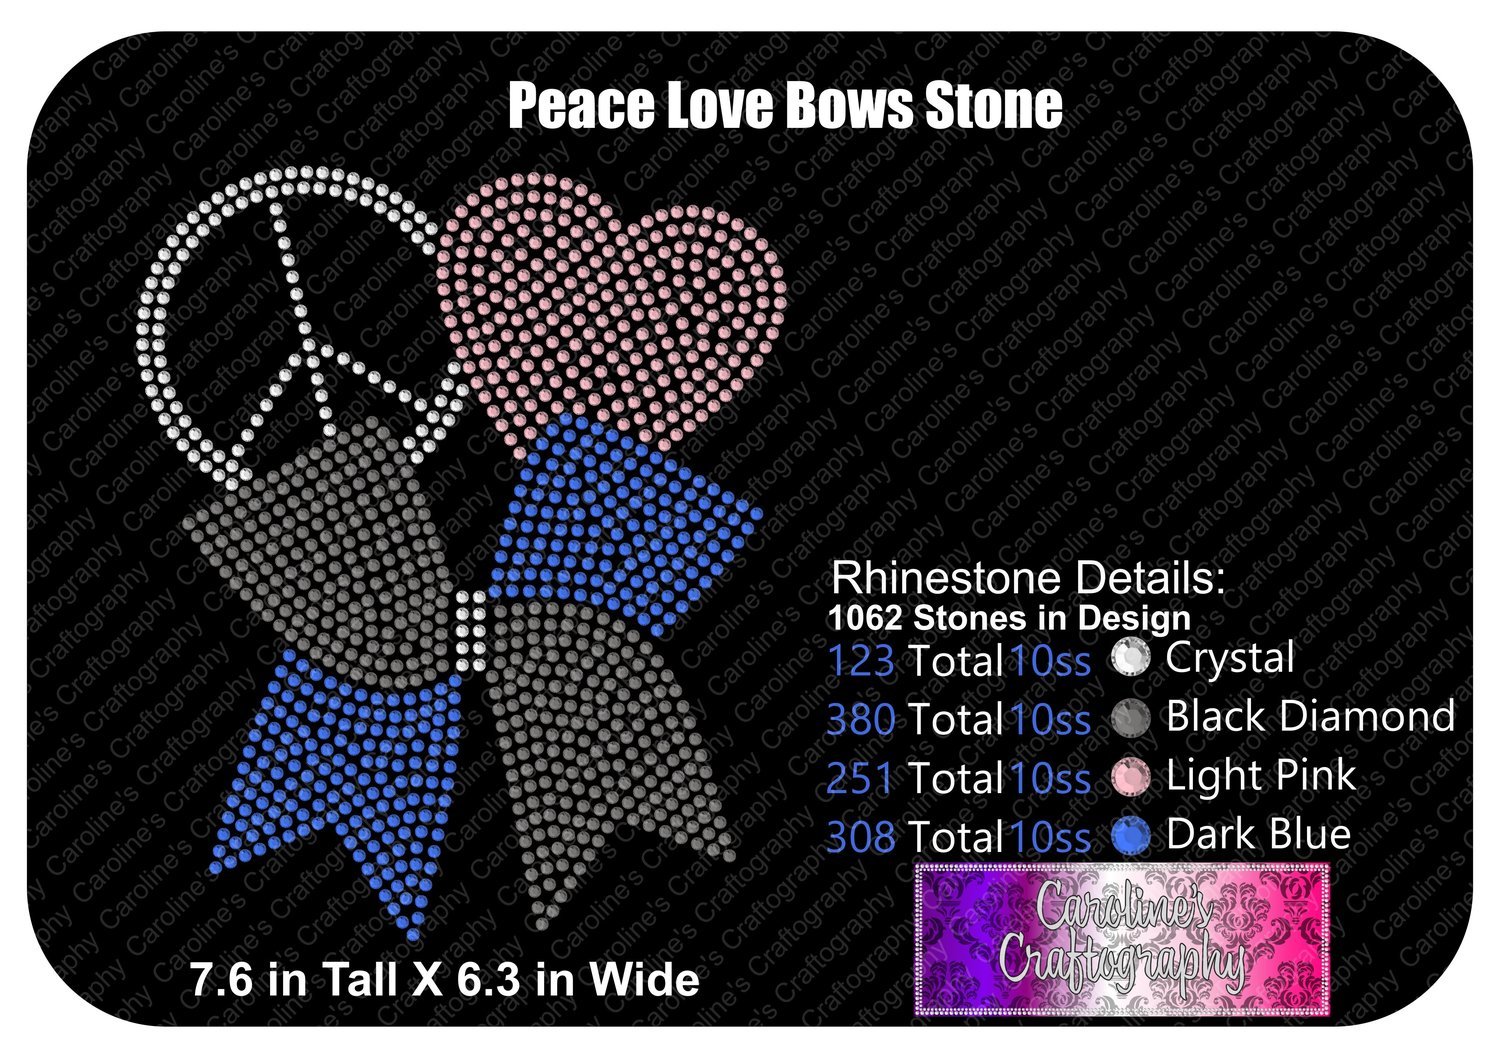 Peace Love Bows Stone